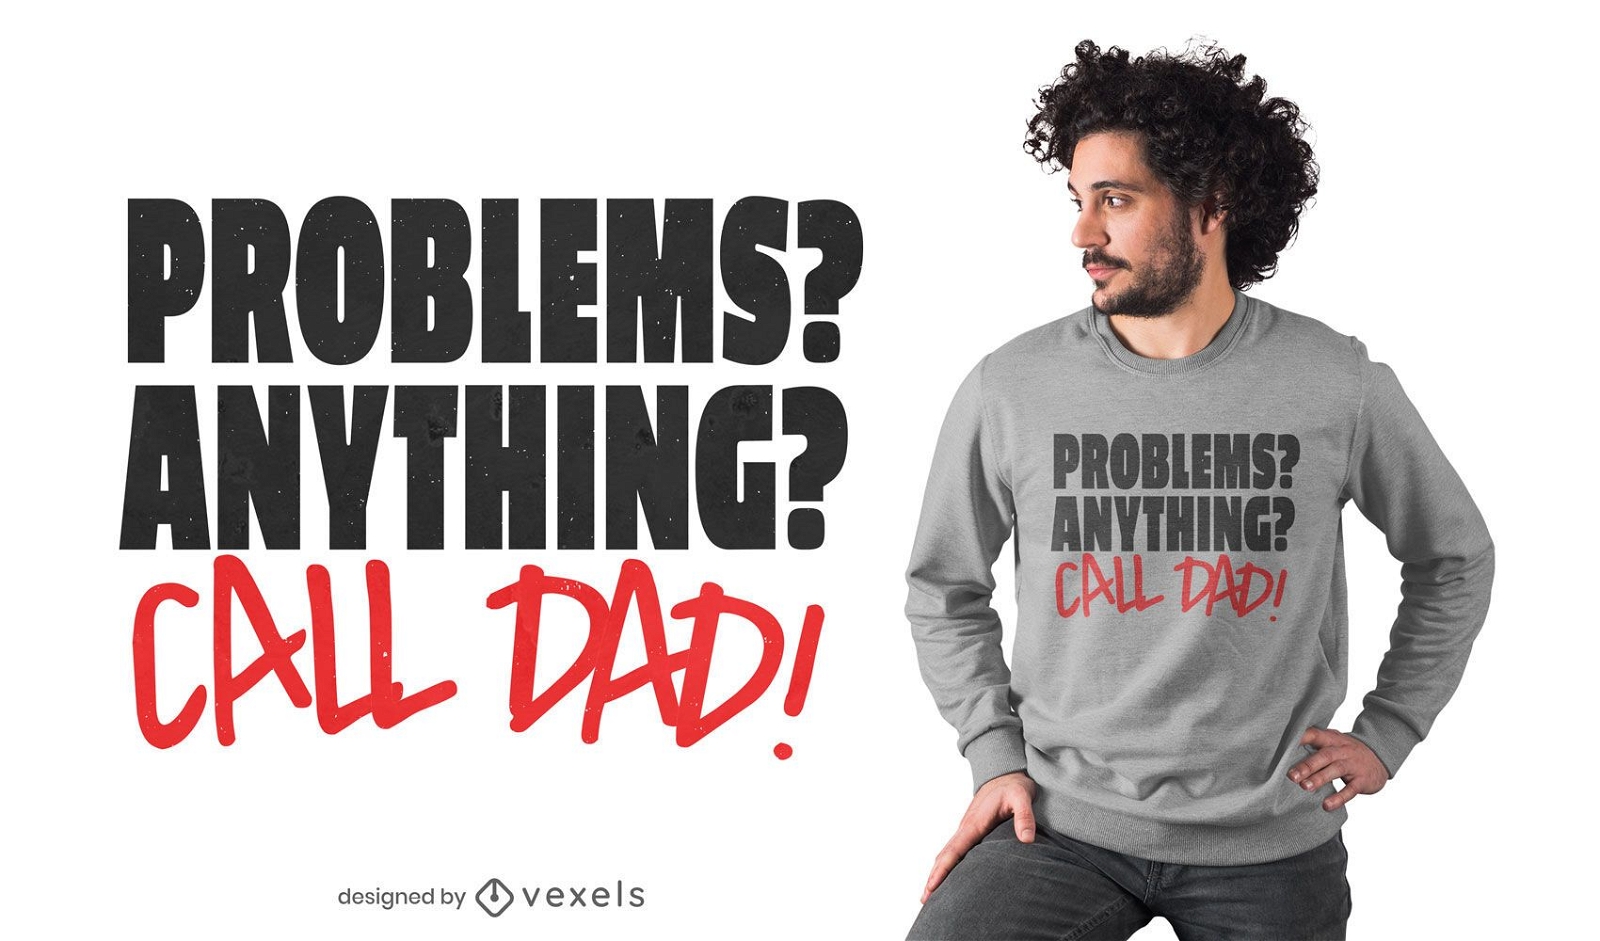 Call dad t-shirt design